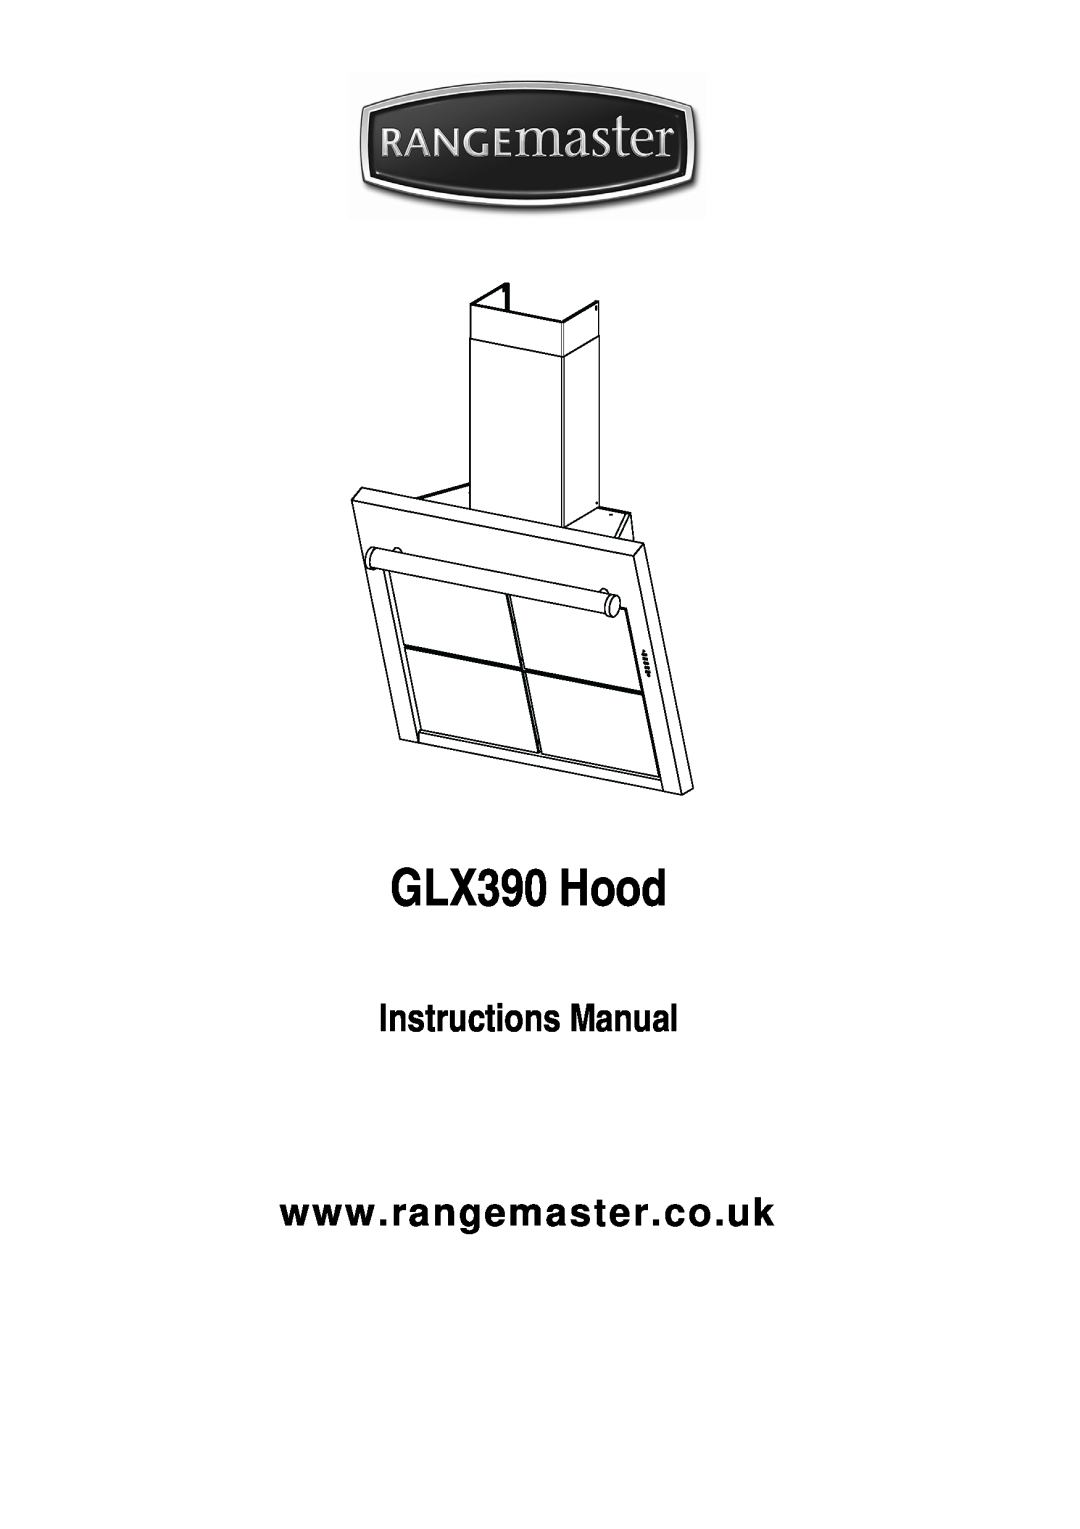 Rangemaster manual GLX390 Hood 